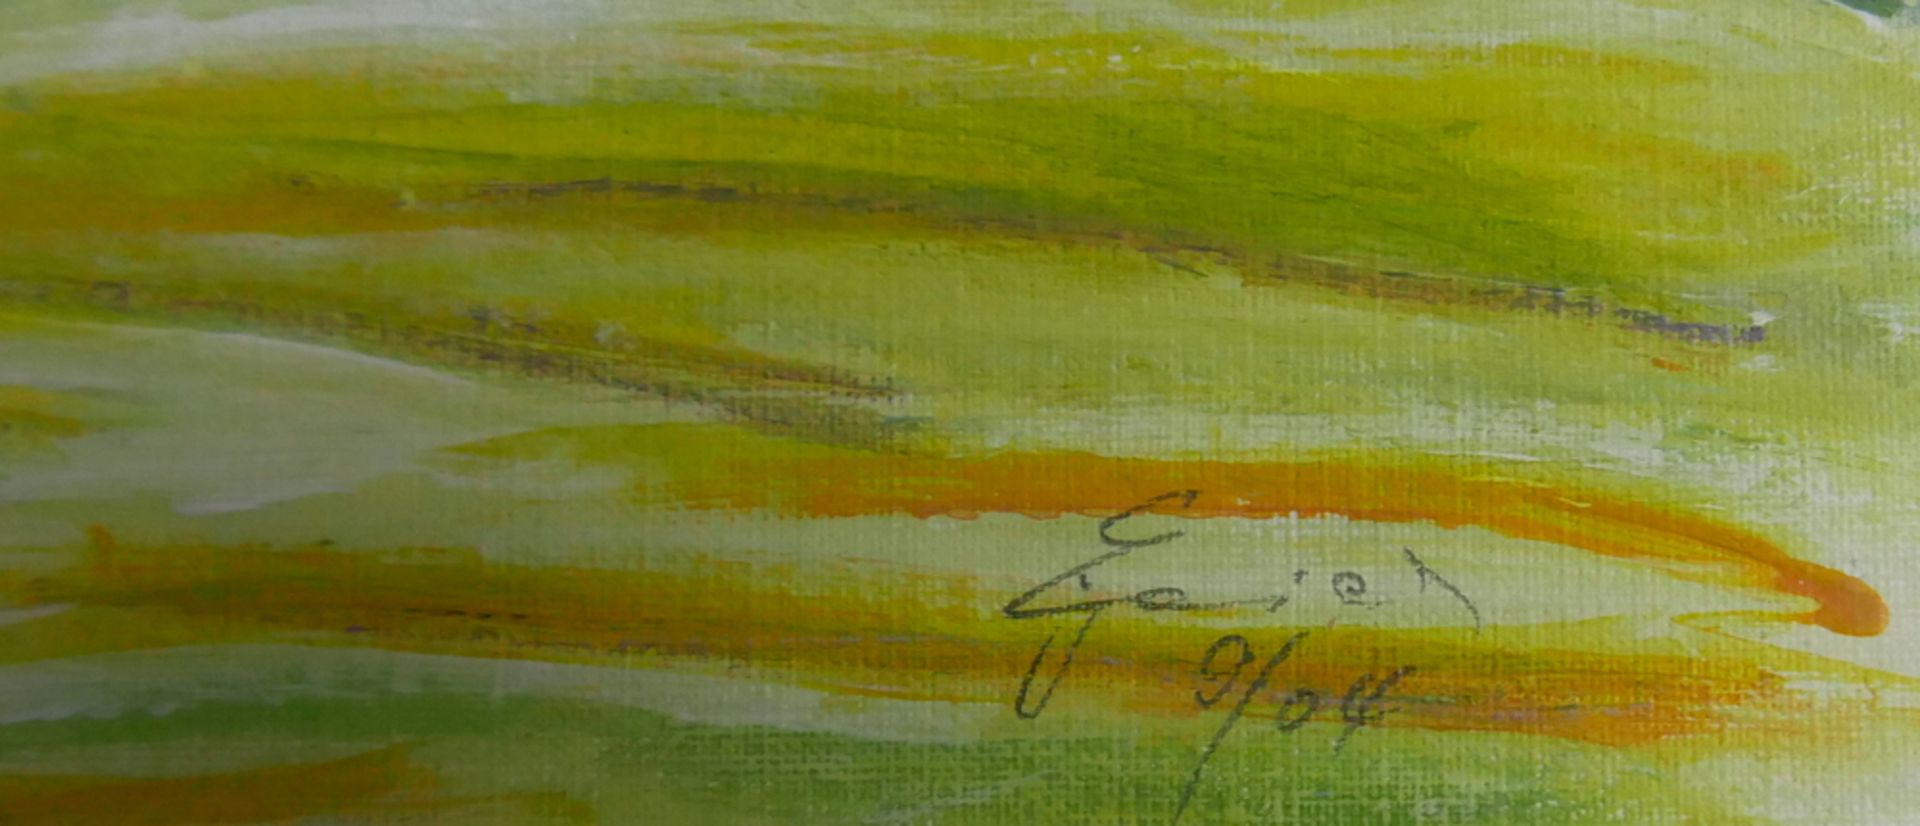 Aquarell "Landschaftsmalerei" hinter Glas gerahmt, rechts unten unleserliche Signatur. Gesamtmaße: - Image 2 of 2